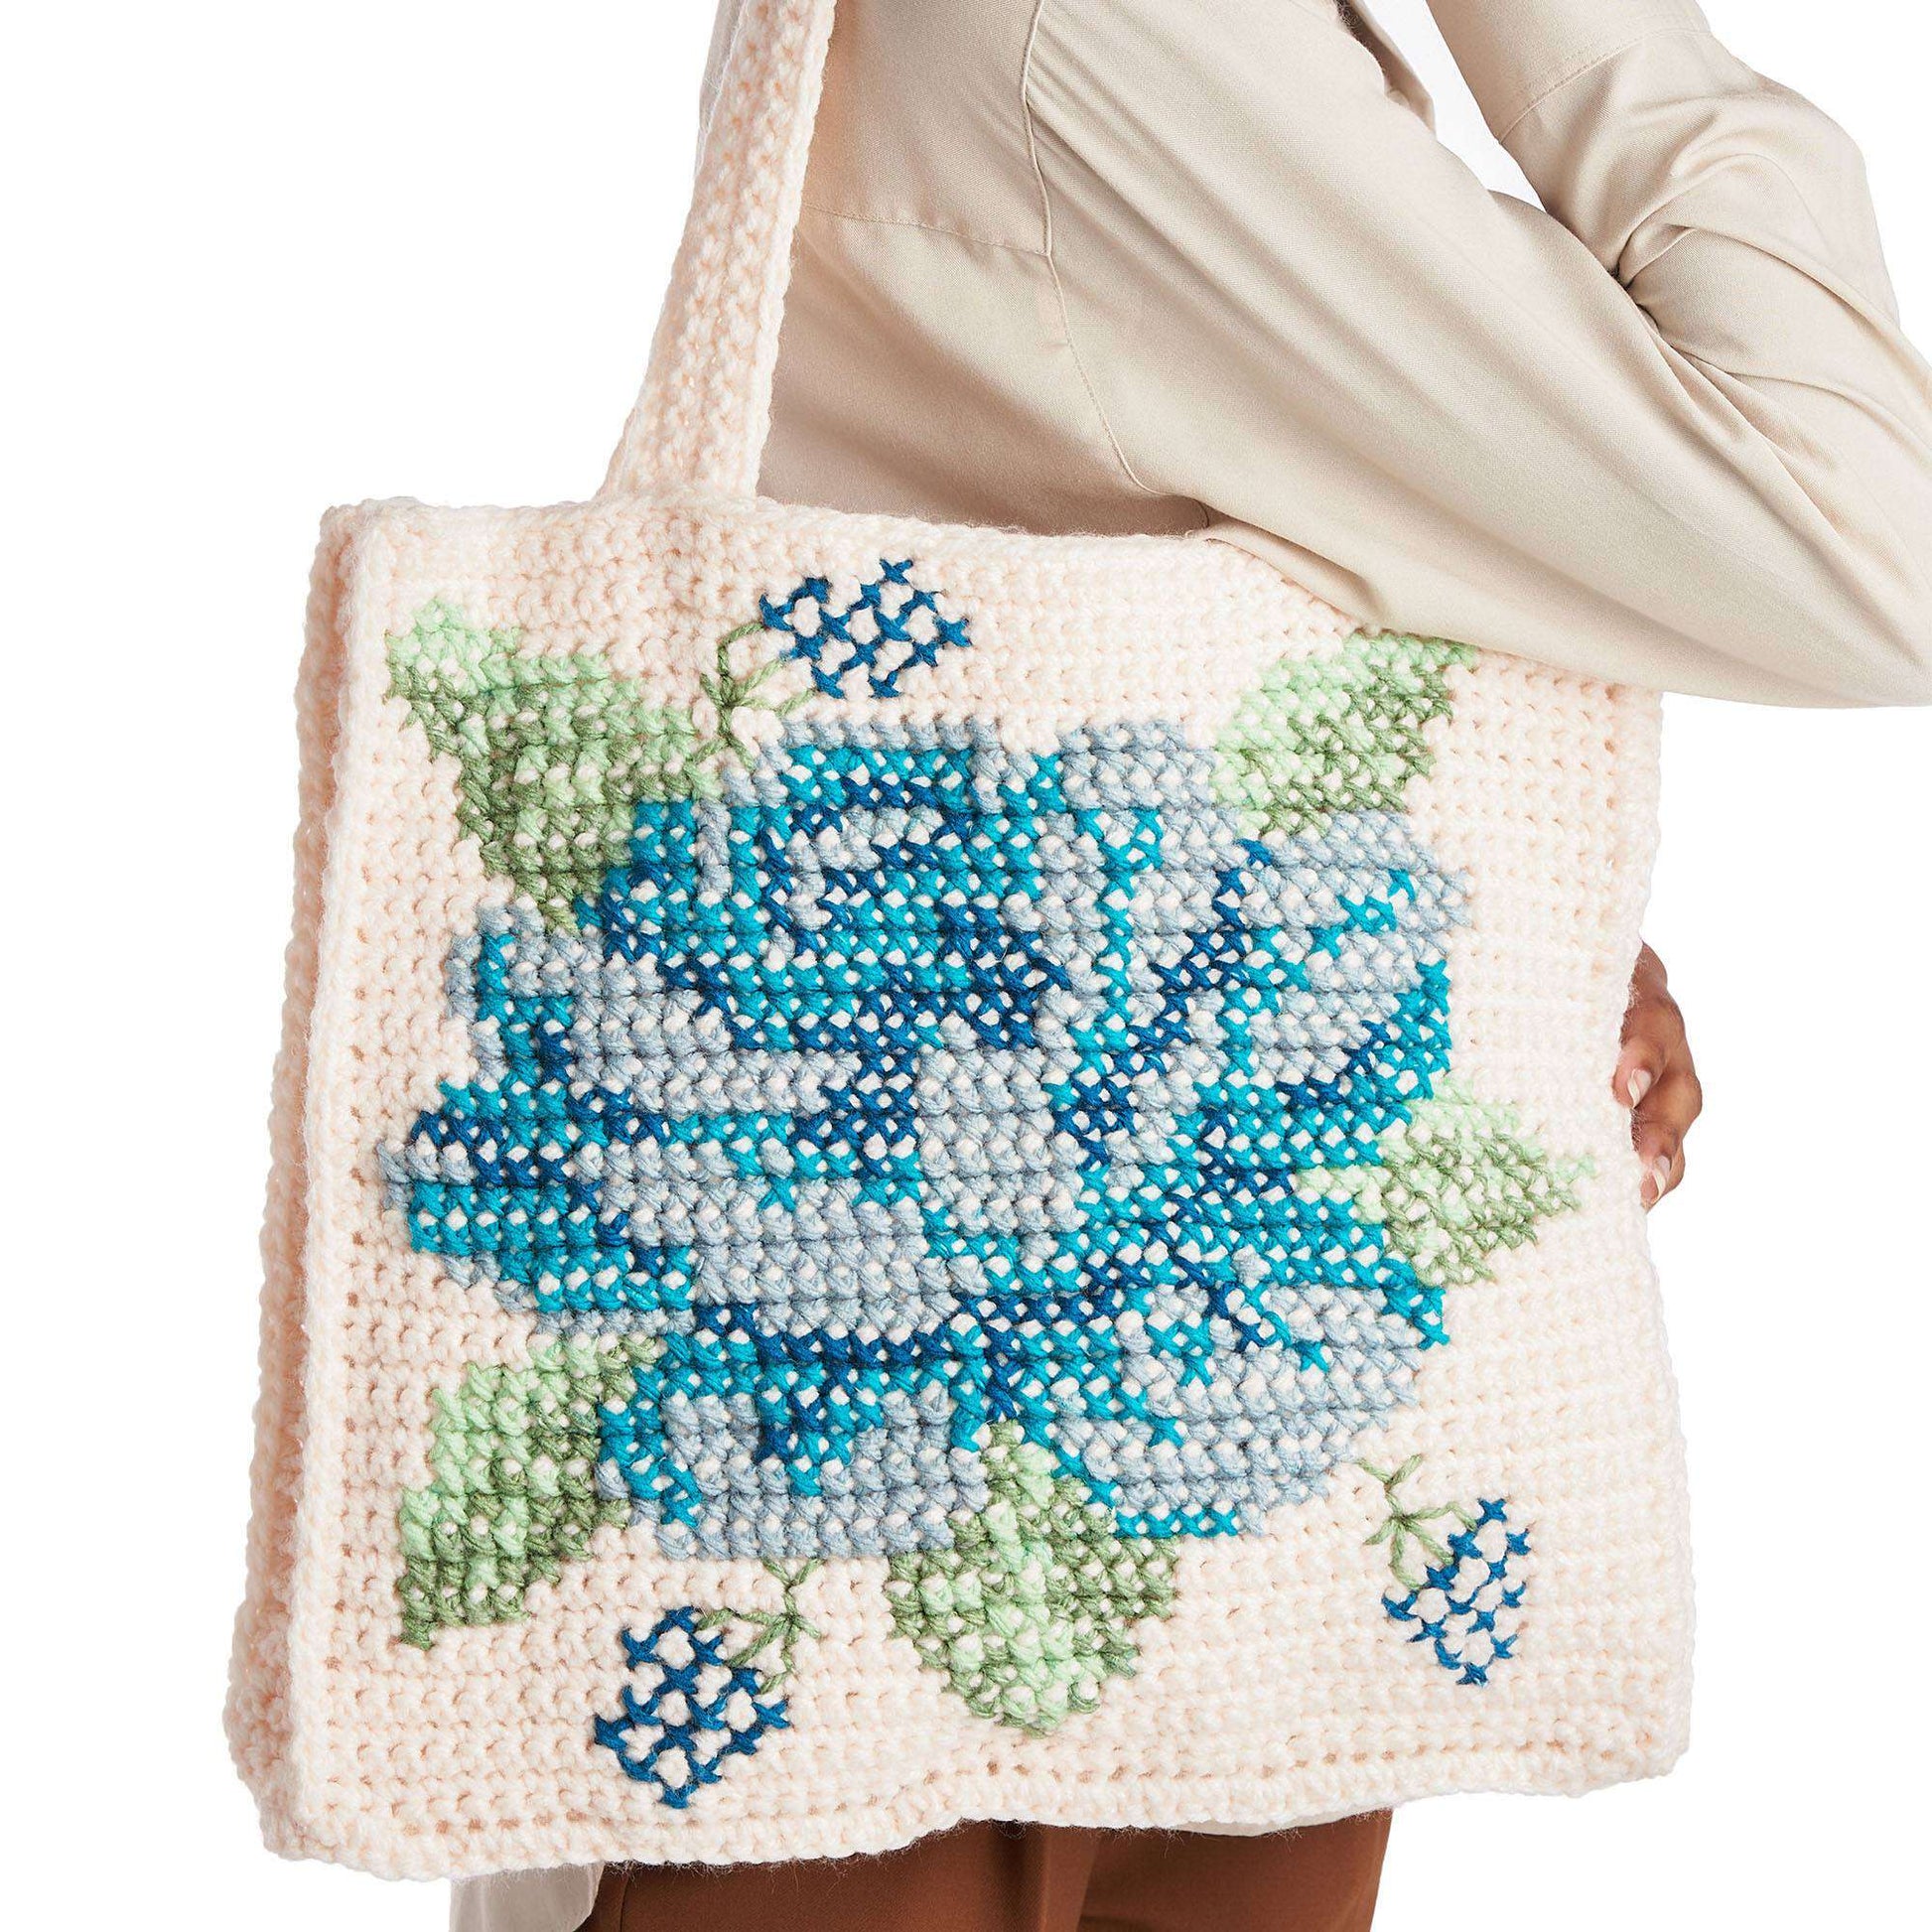 Caron Crochet Floral Cross Stitch Tote Bag Pattern